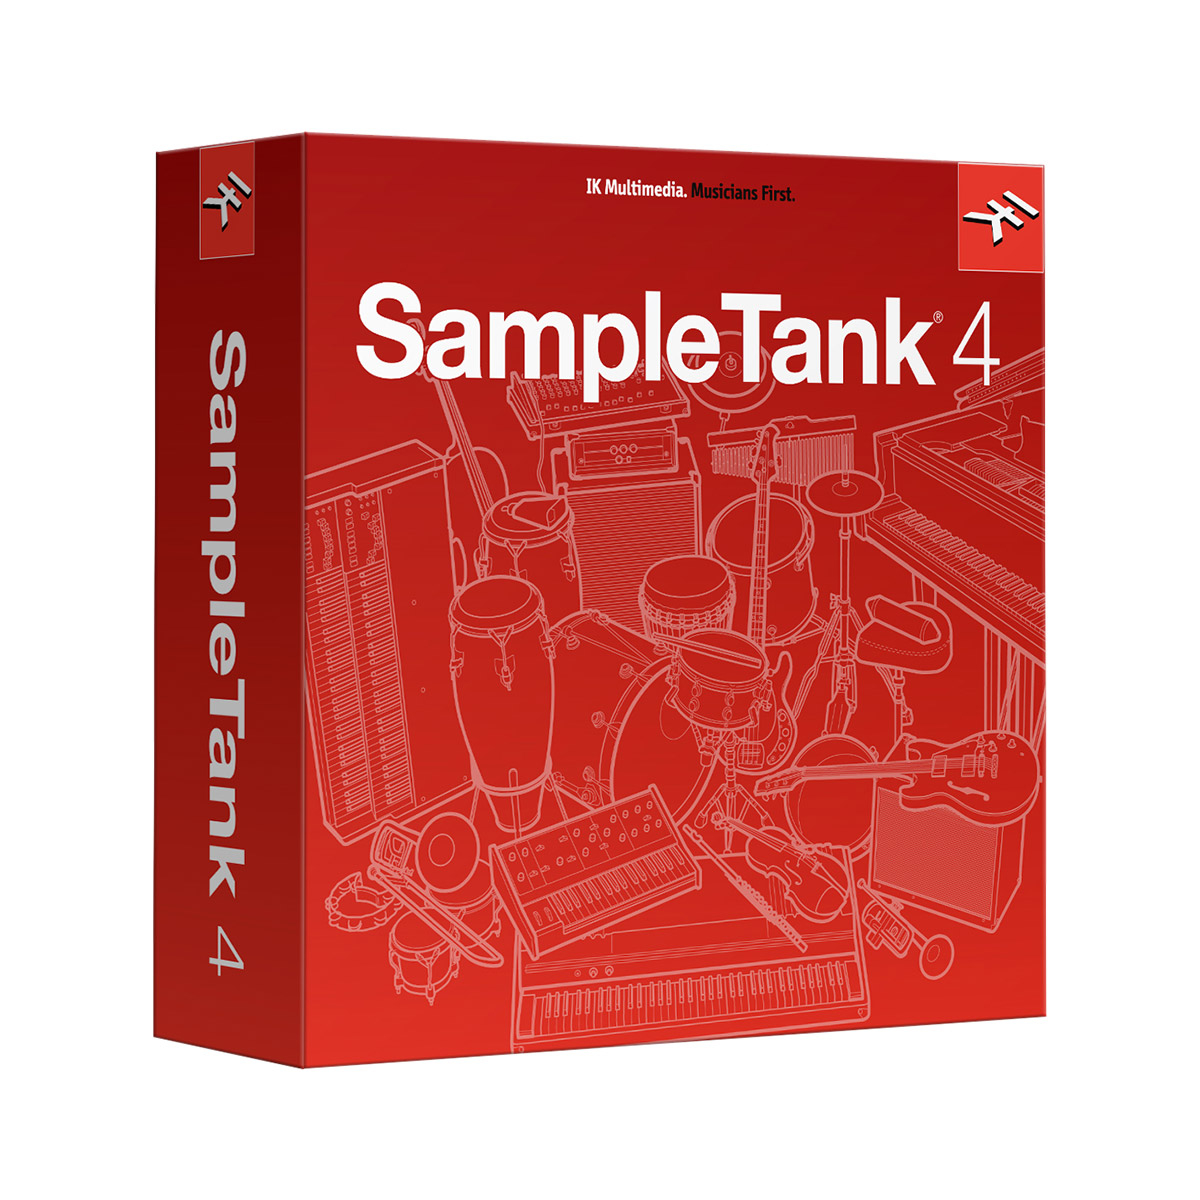 sampletank 4 se review